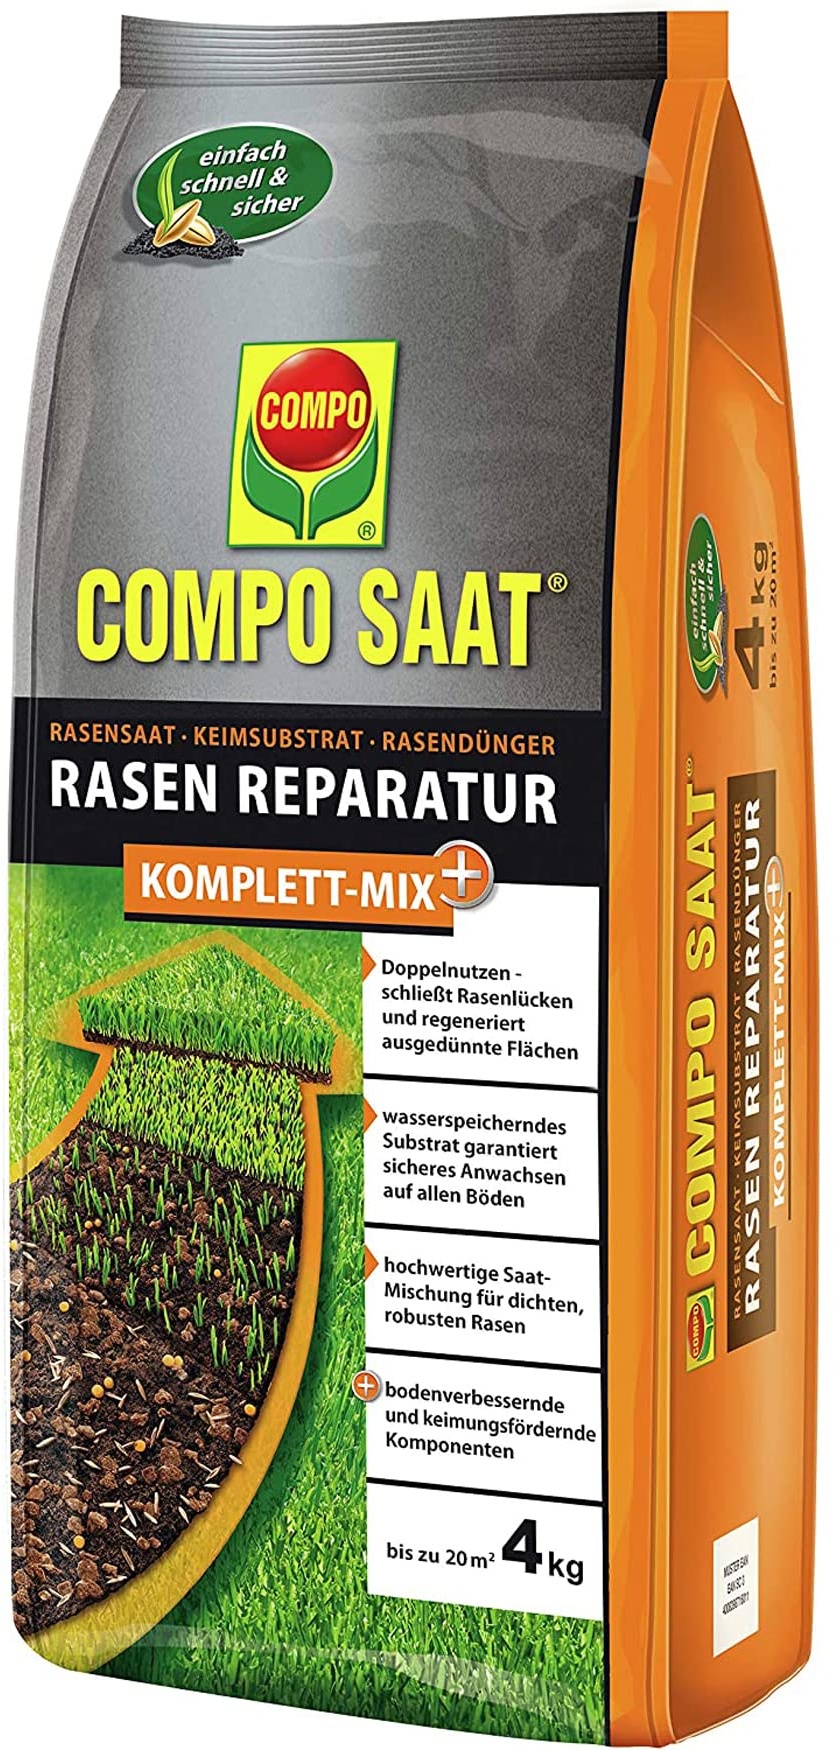 COMPO SAAT Rasen Reparatur Komplett-Mix+, Rasensamen, Keimsubstrat, Langzeit-Rasendünger und Bodenaktivator, 4 kg, 20 m2